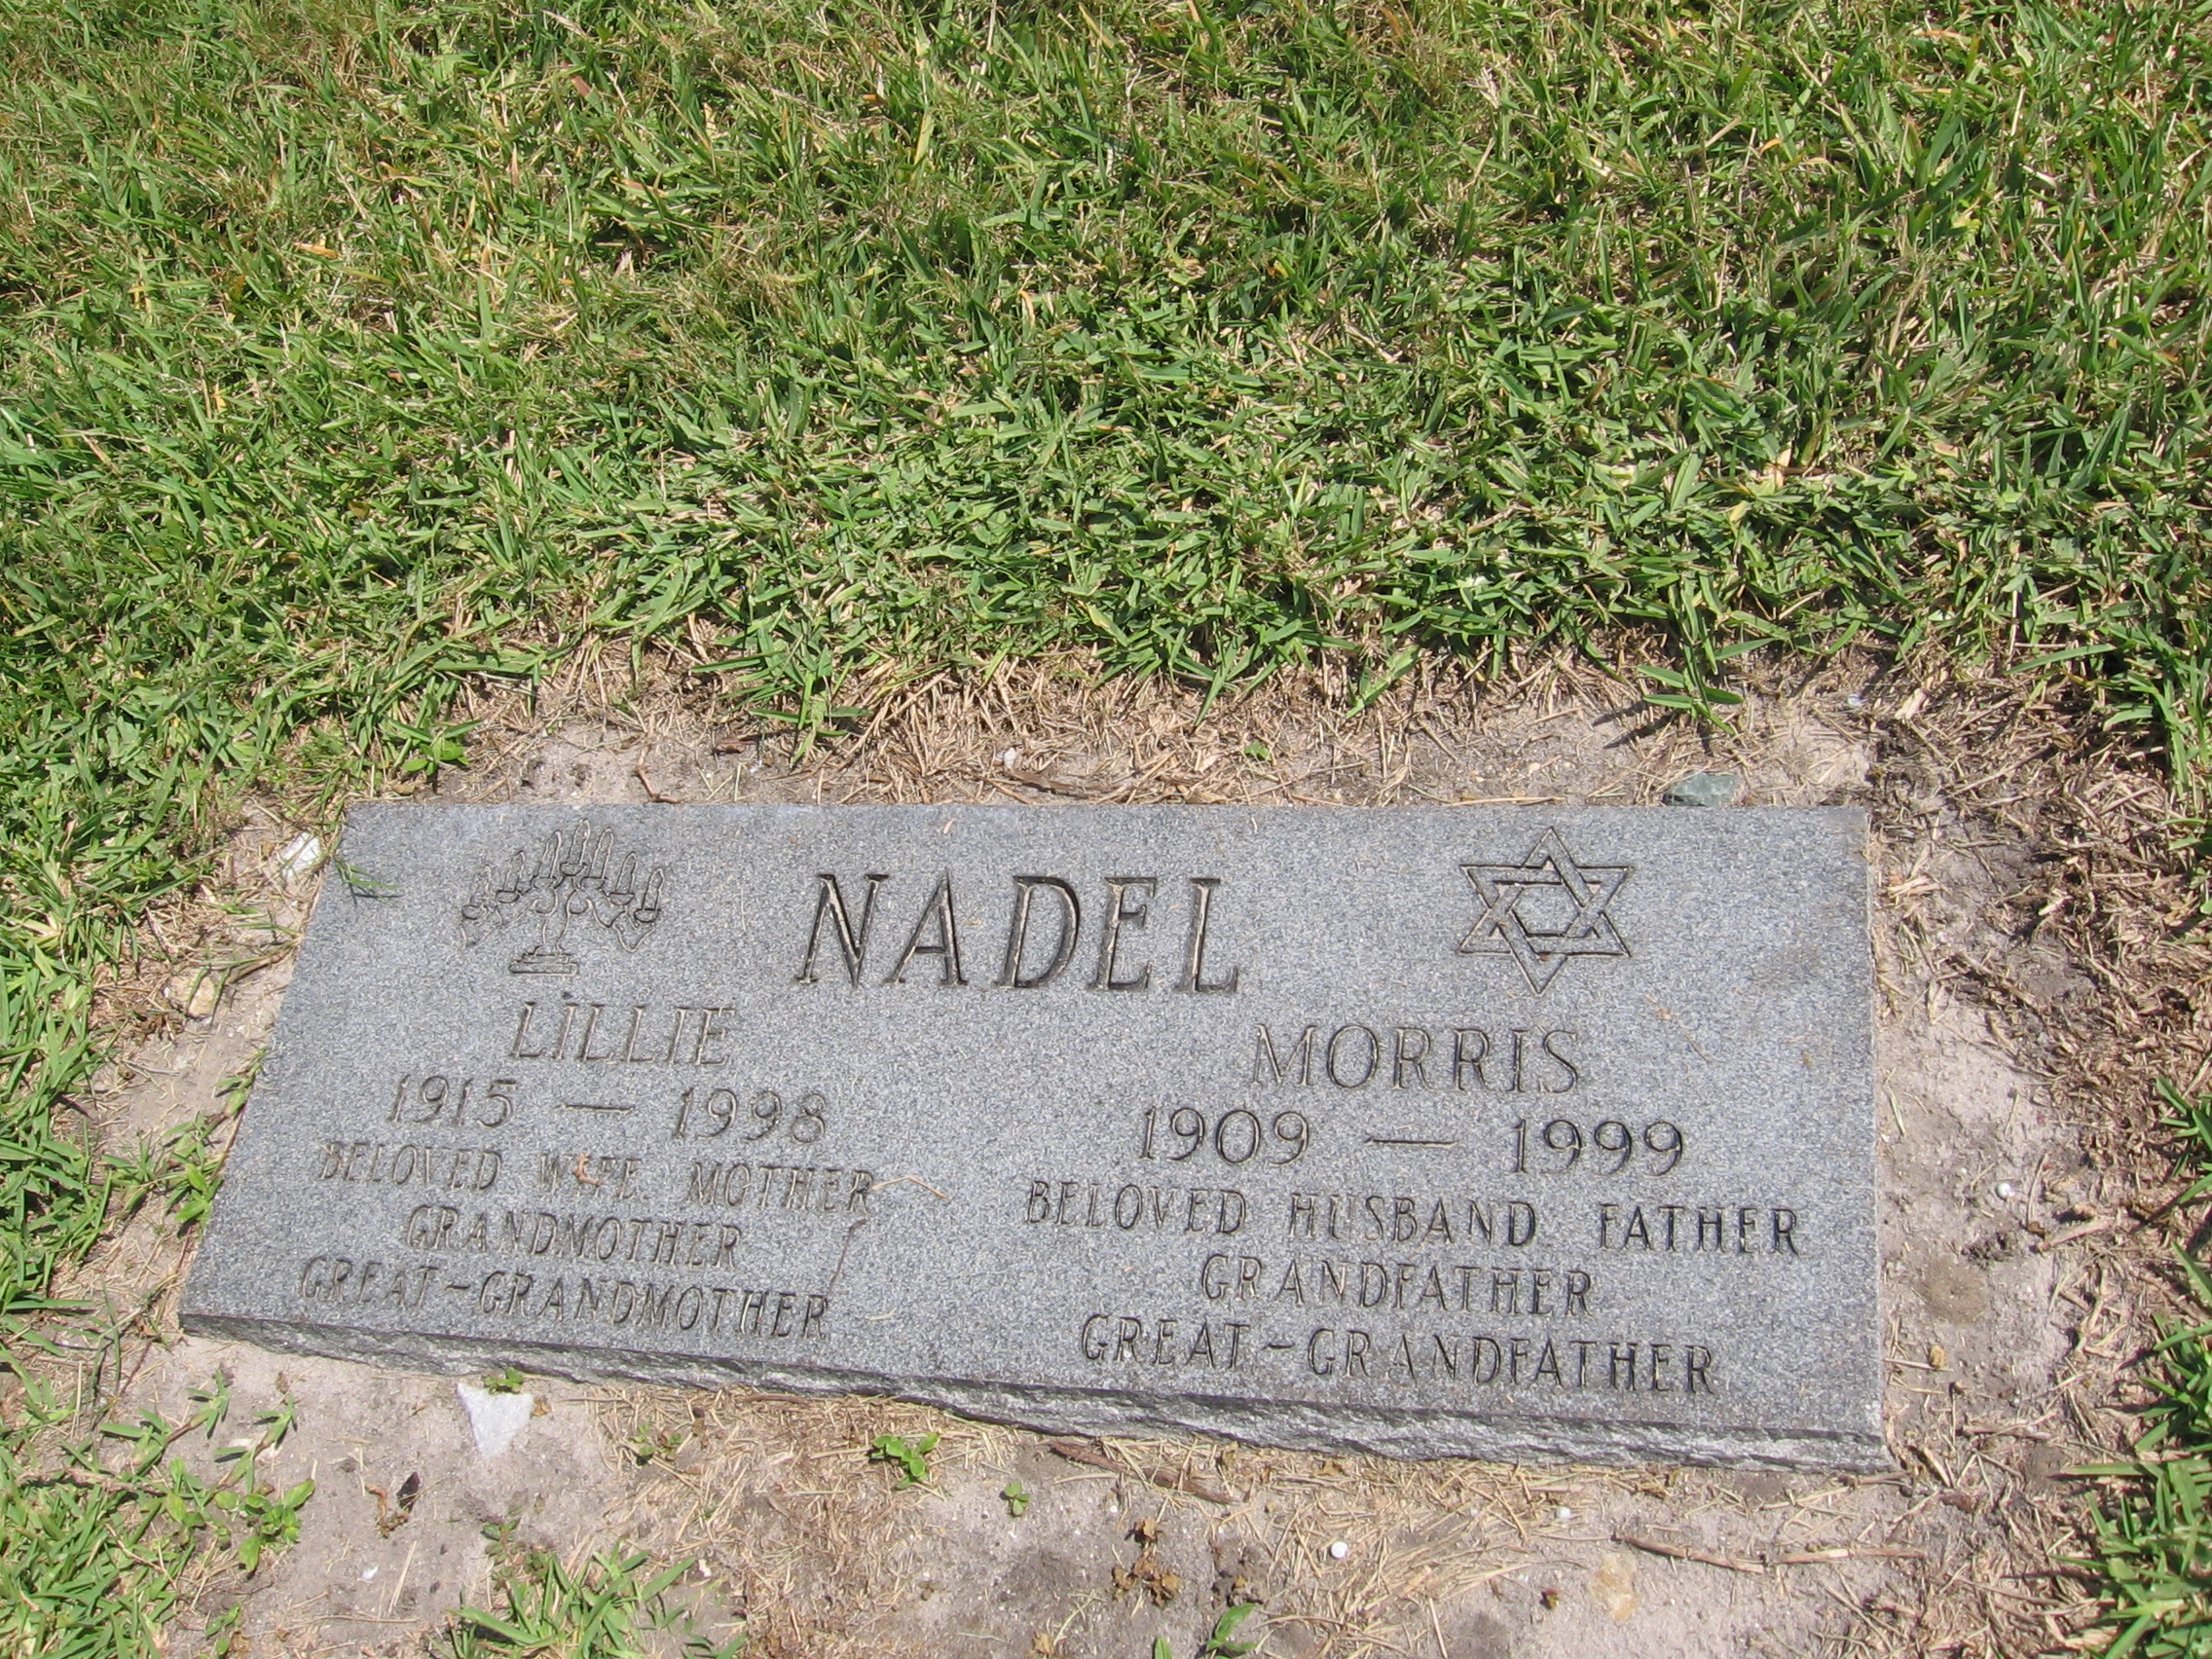 Morris Nadel